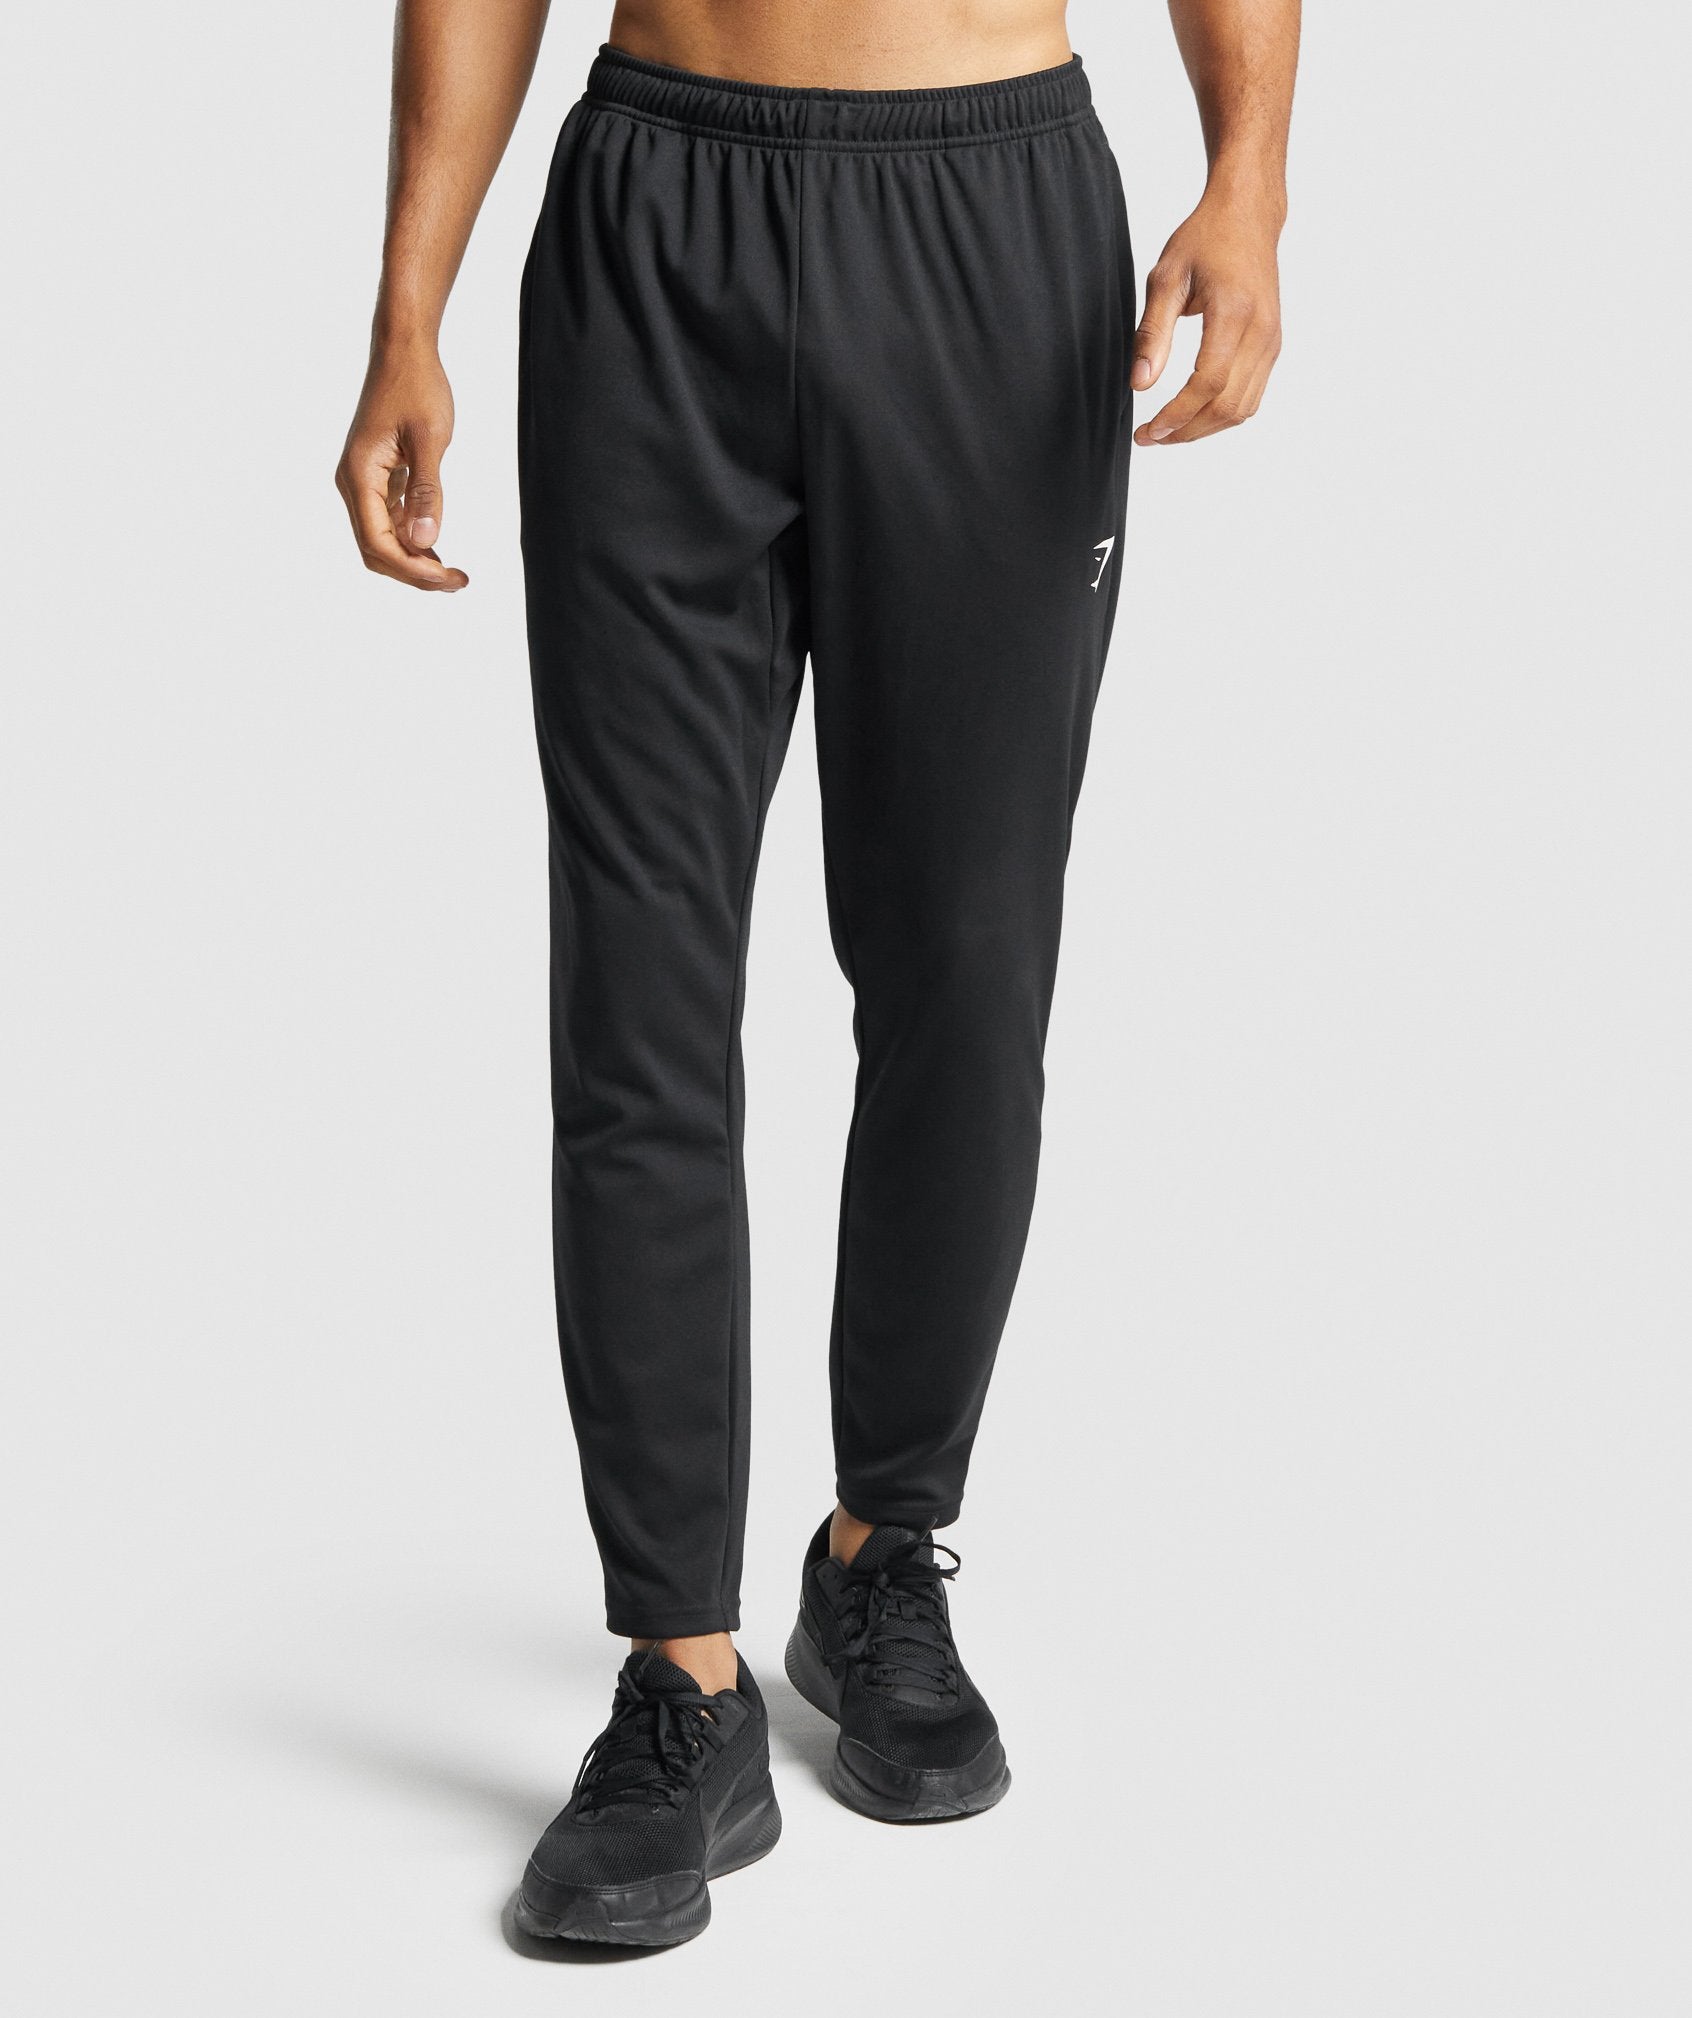 Black Comfort Knit Jogger Pant, Men's Bottom